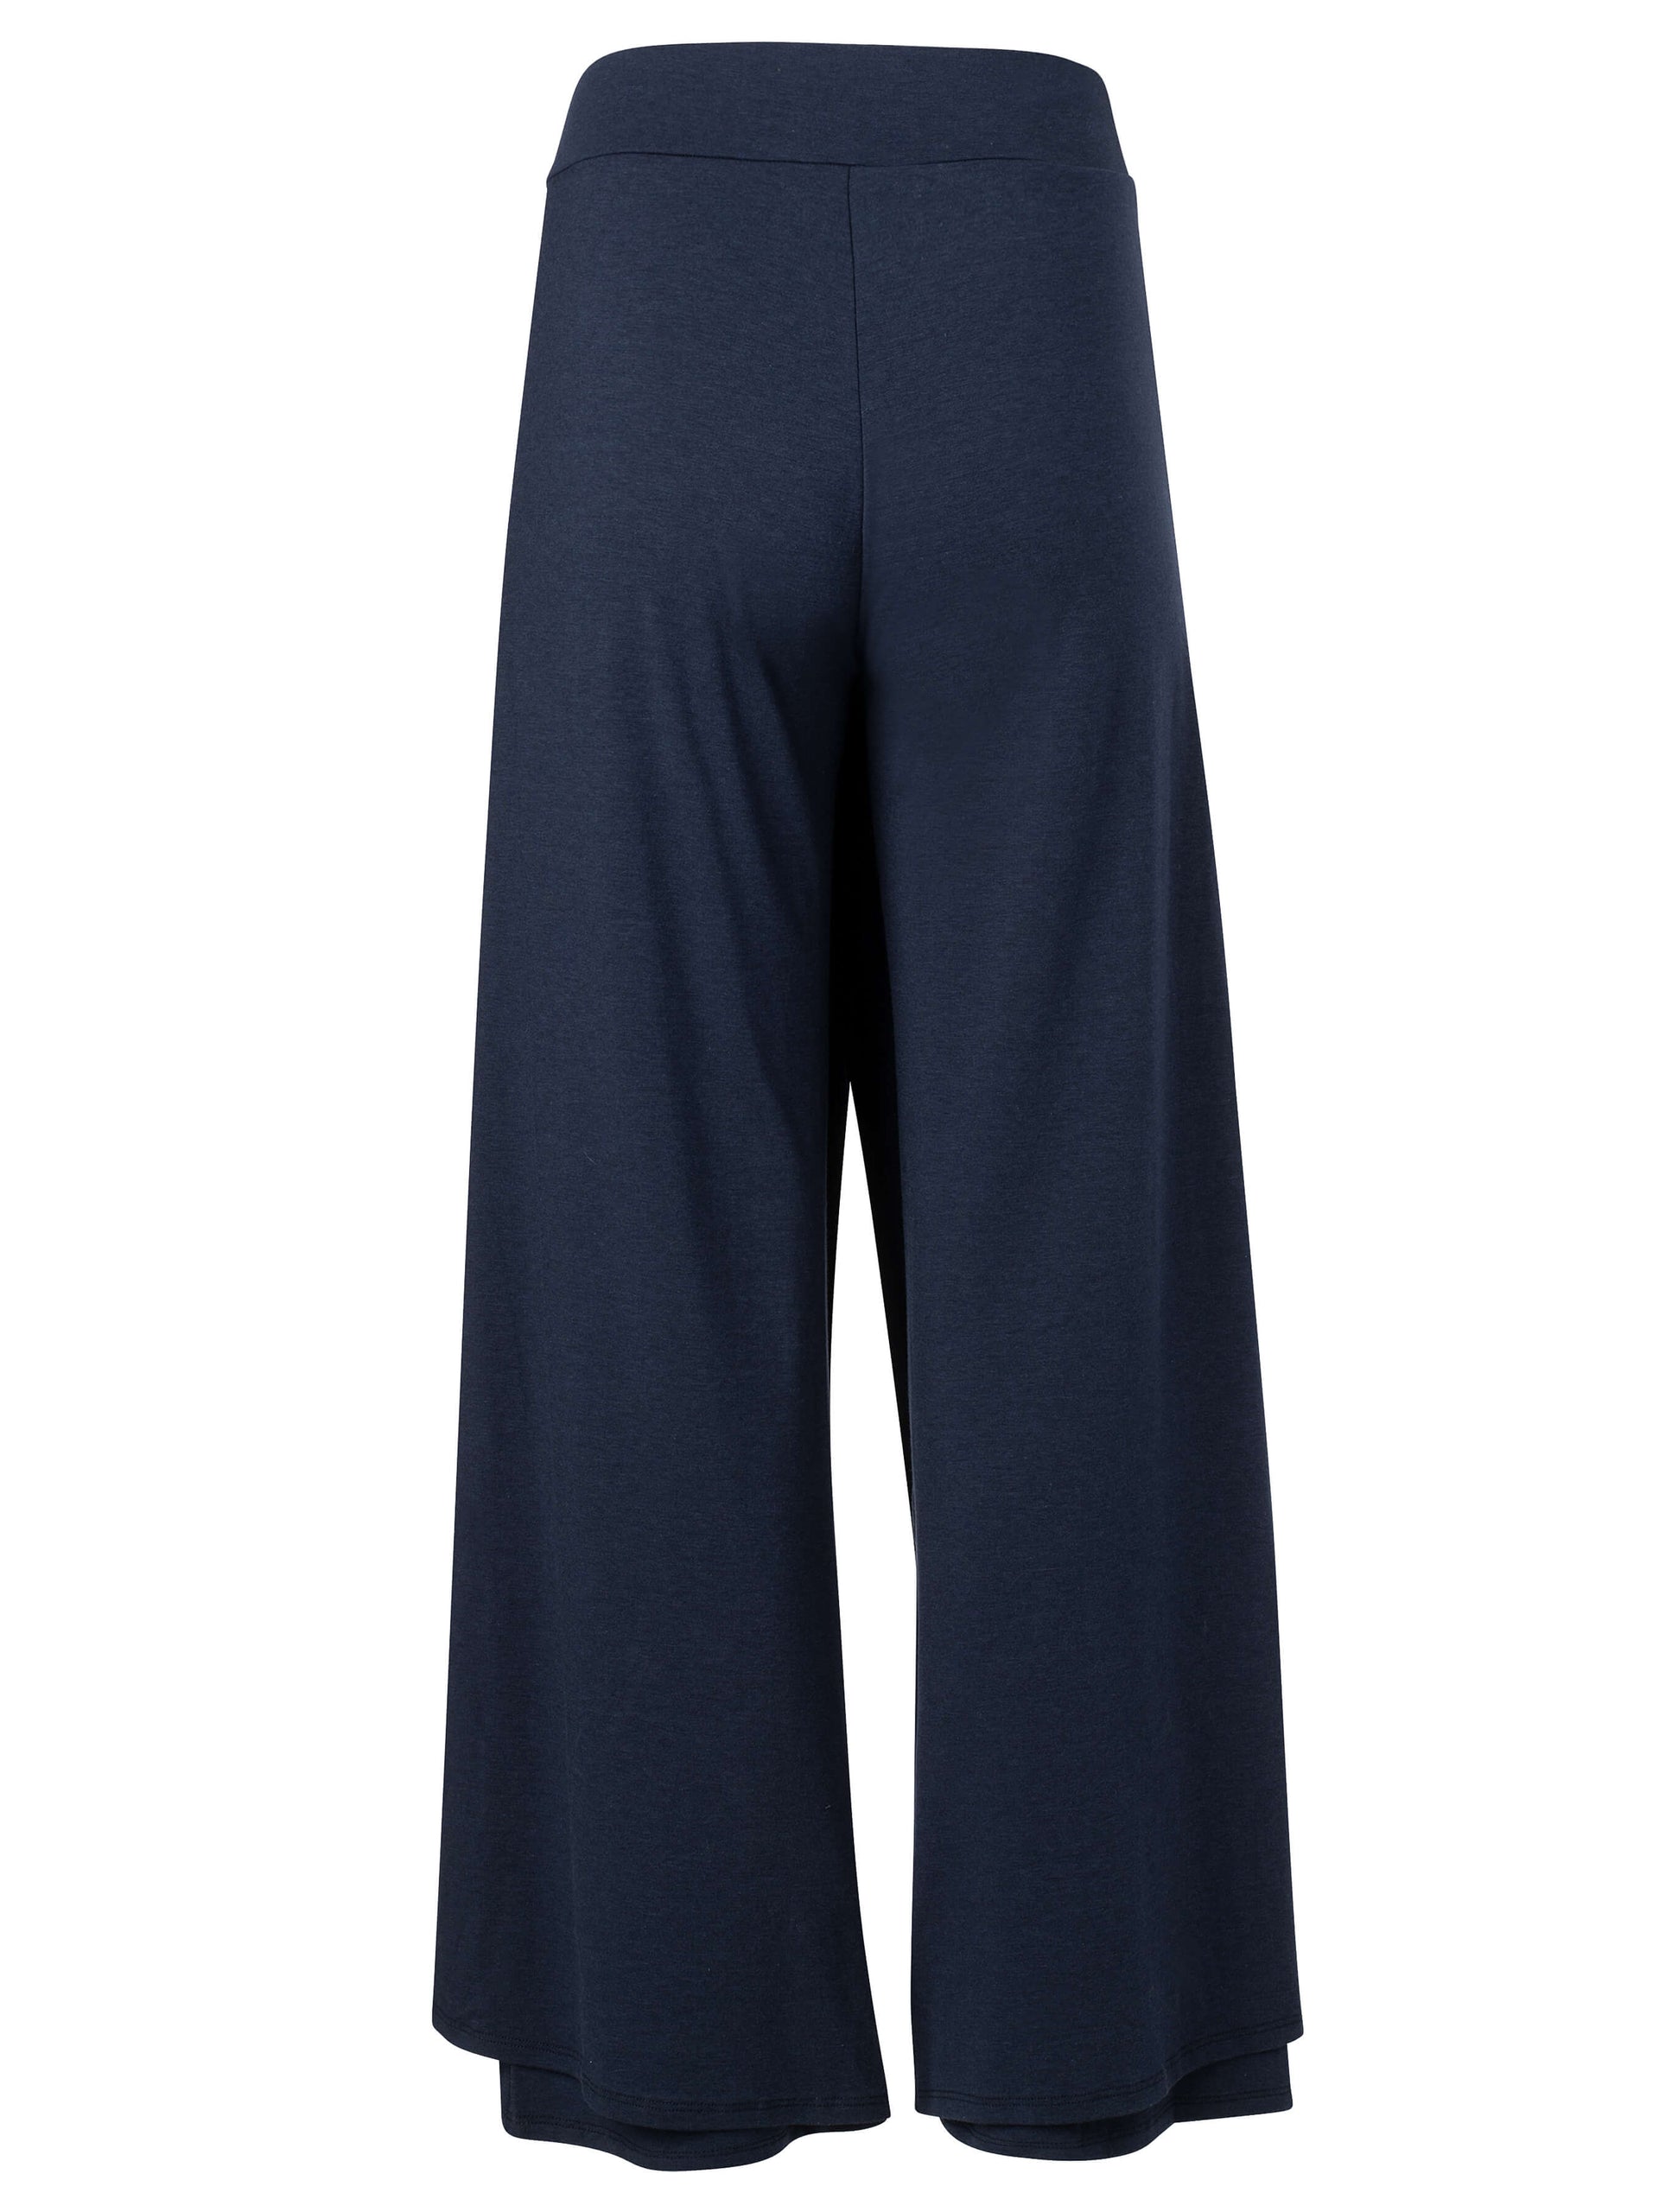 Pantalon-INDIEN-tencel coton bio-marine-femme-ghost dos-E413C